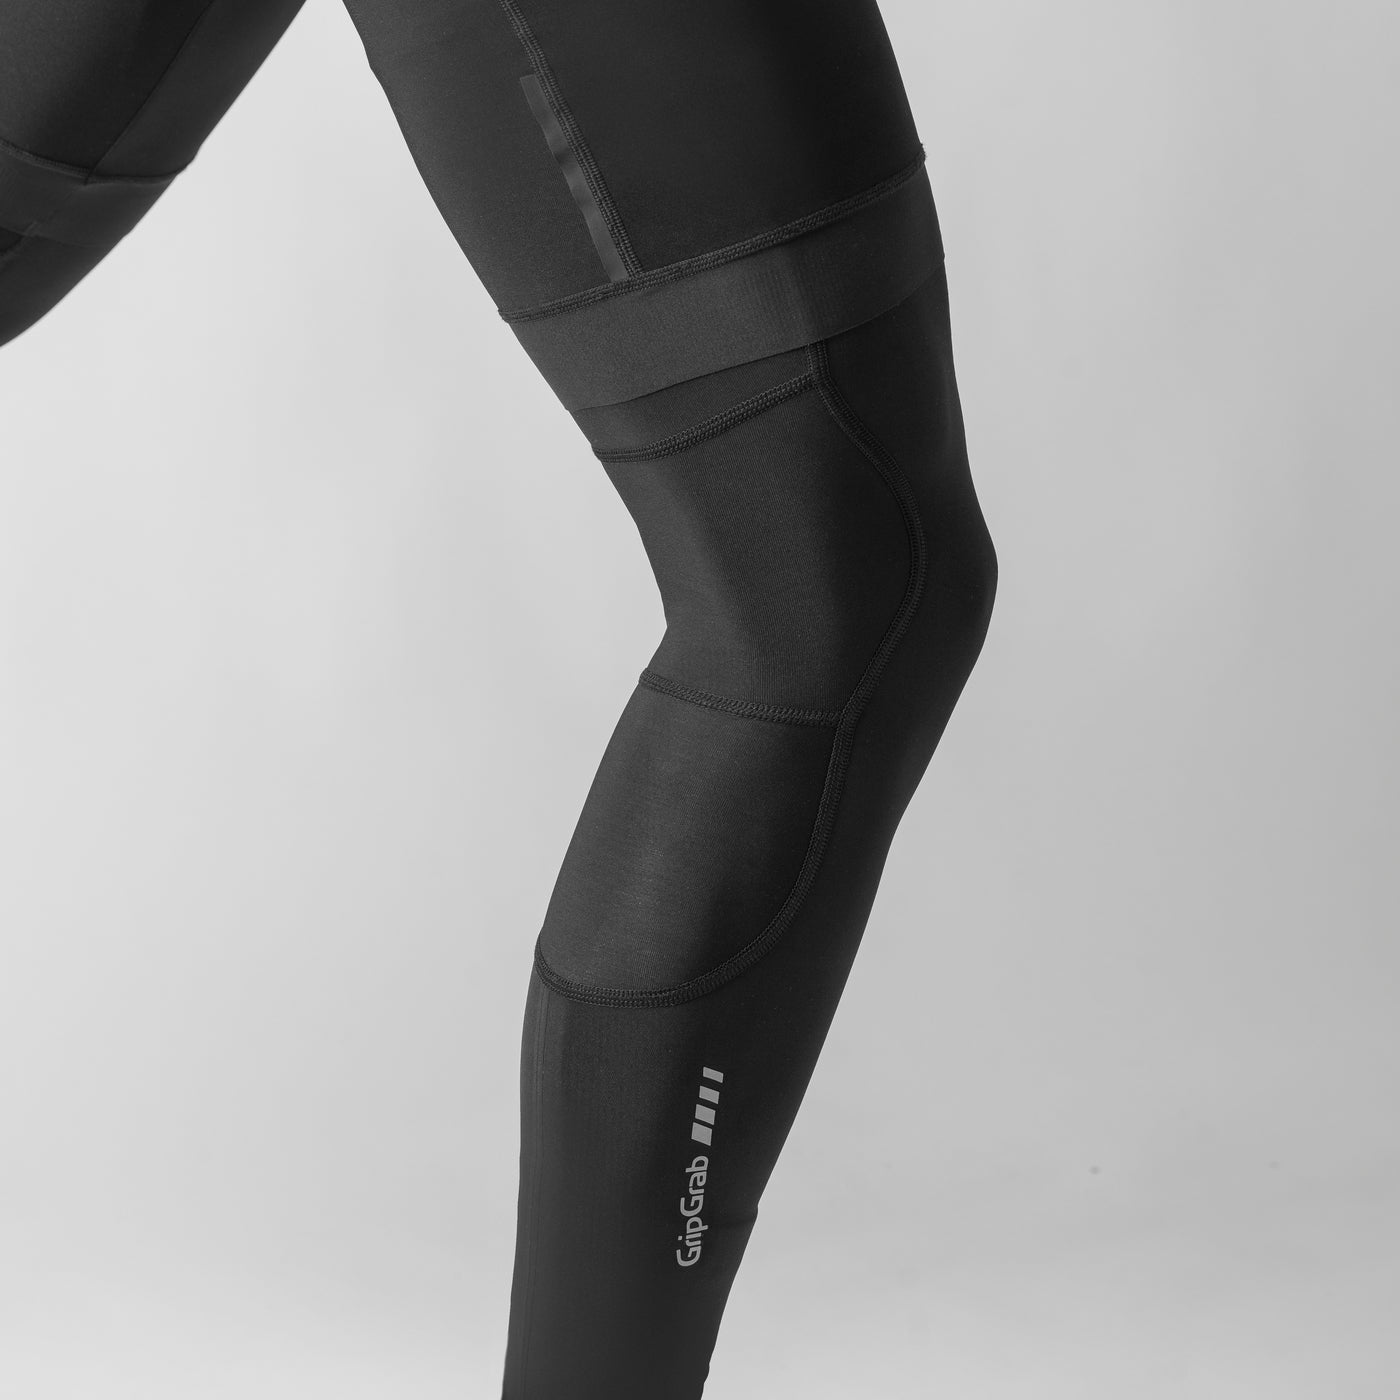 AquaRepel 2 Water-Resistant Leg Warmers